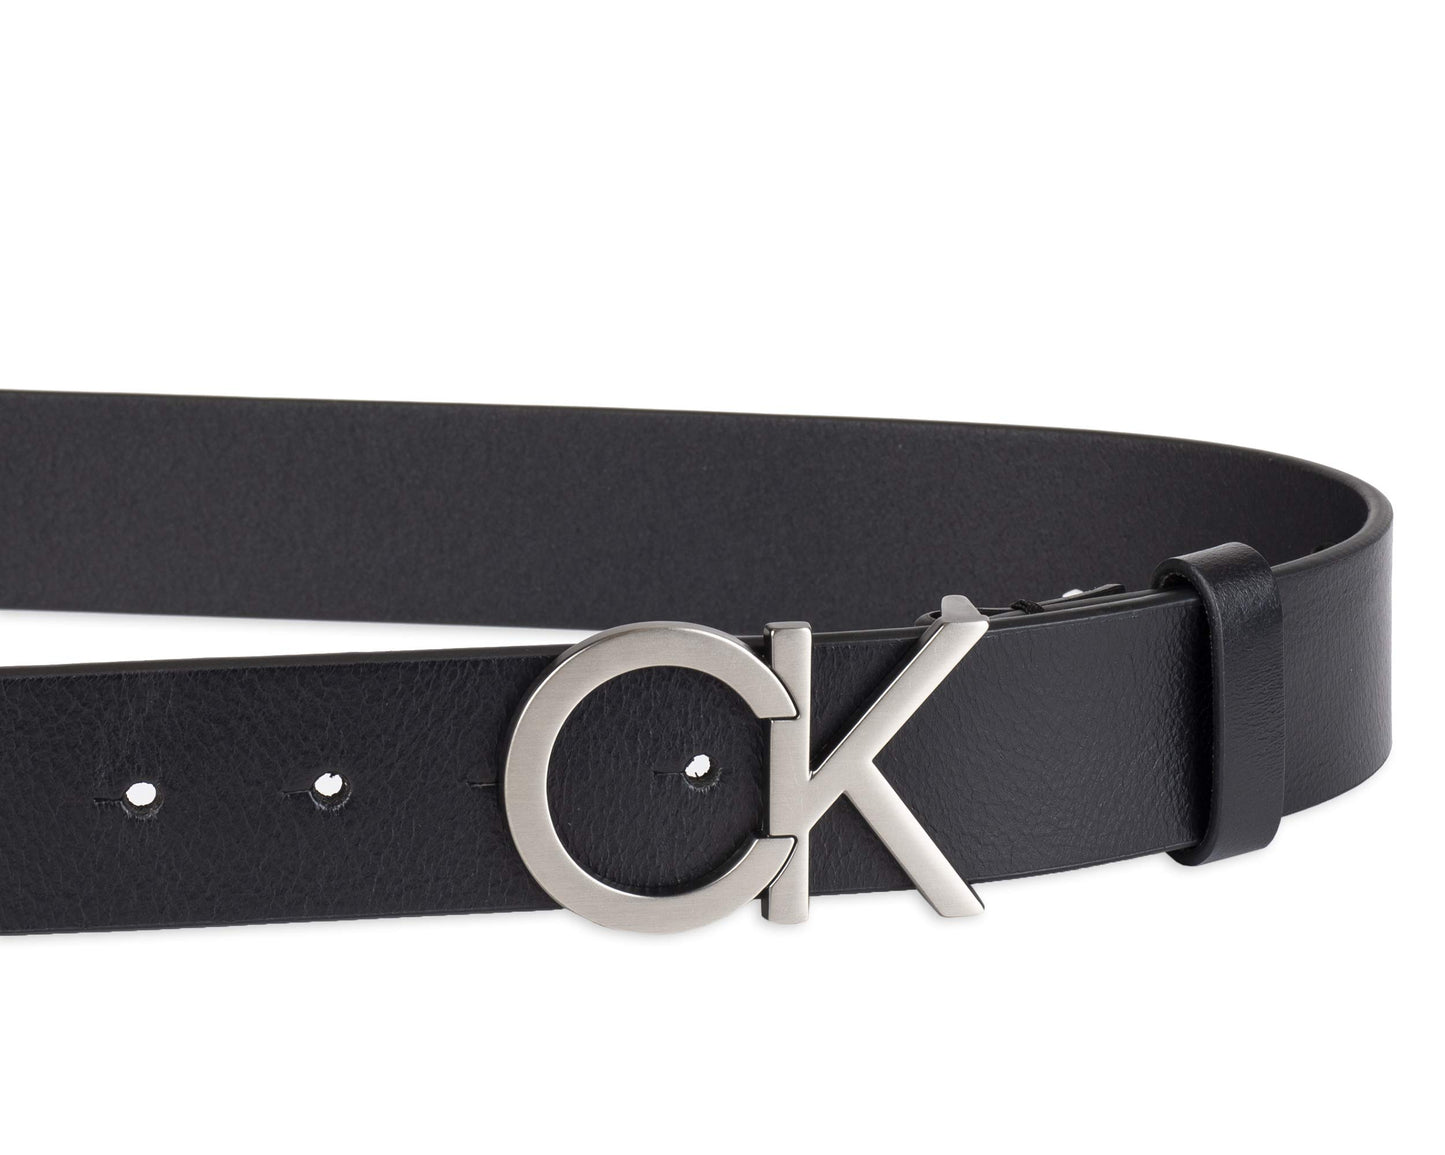 Calvin Klein Men's Casual CK Monogram Cut Out Buckle Belt